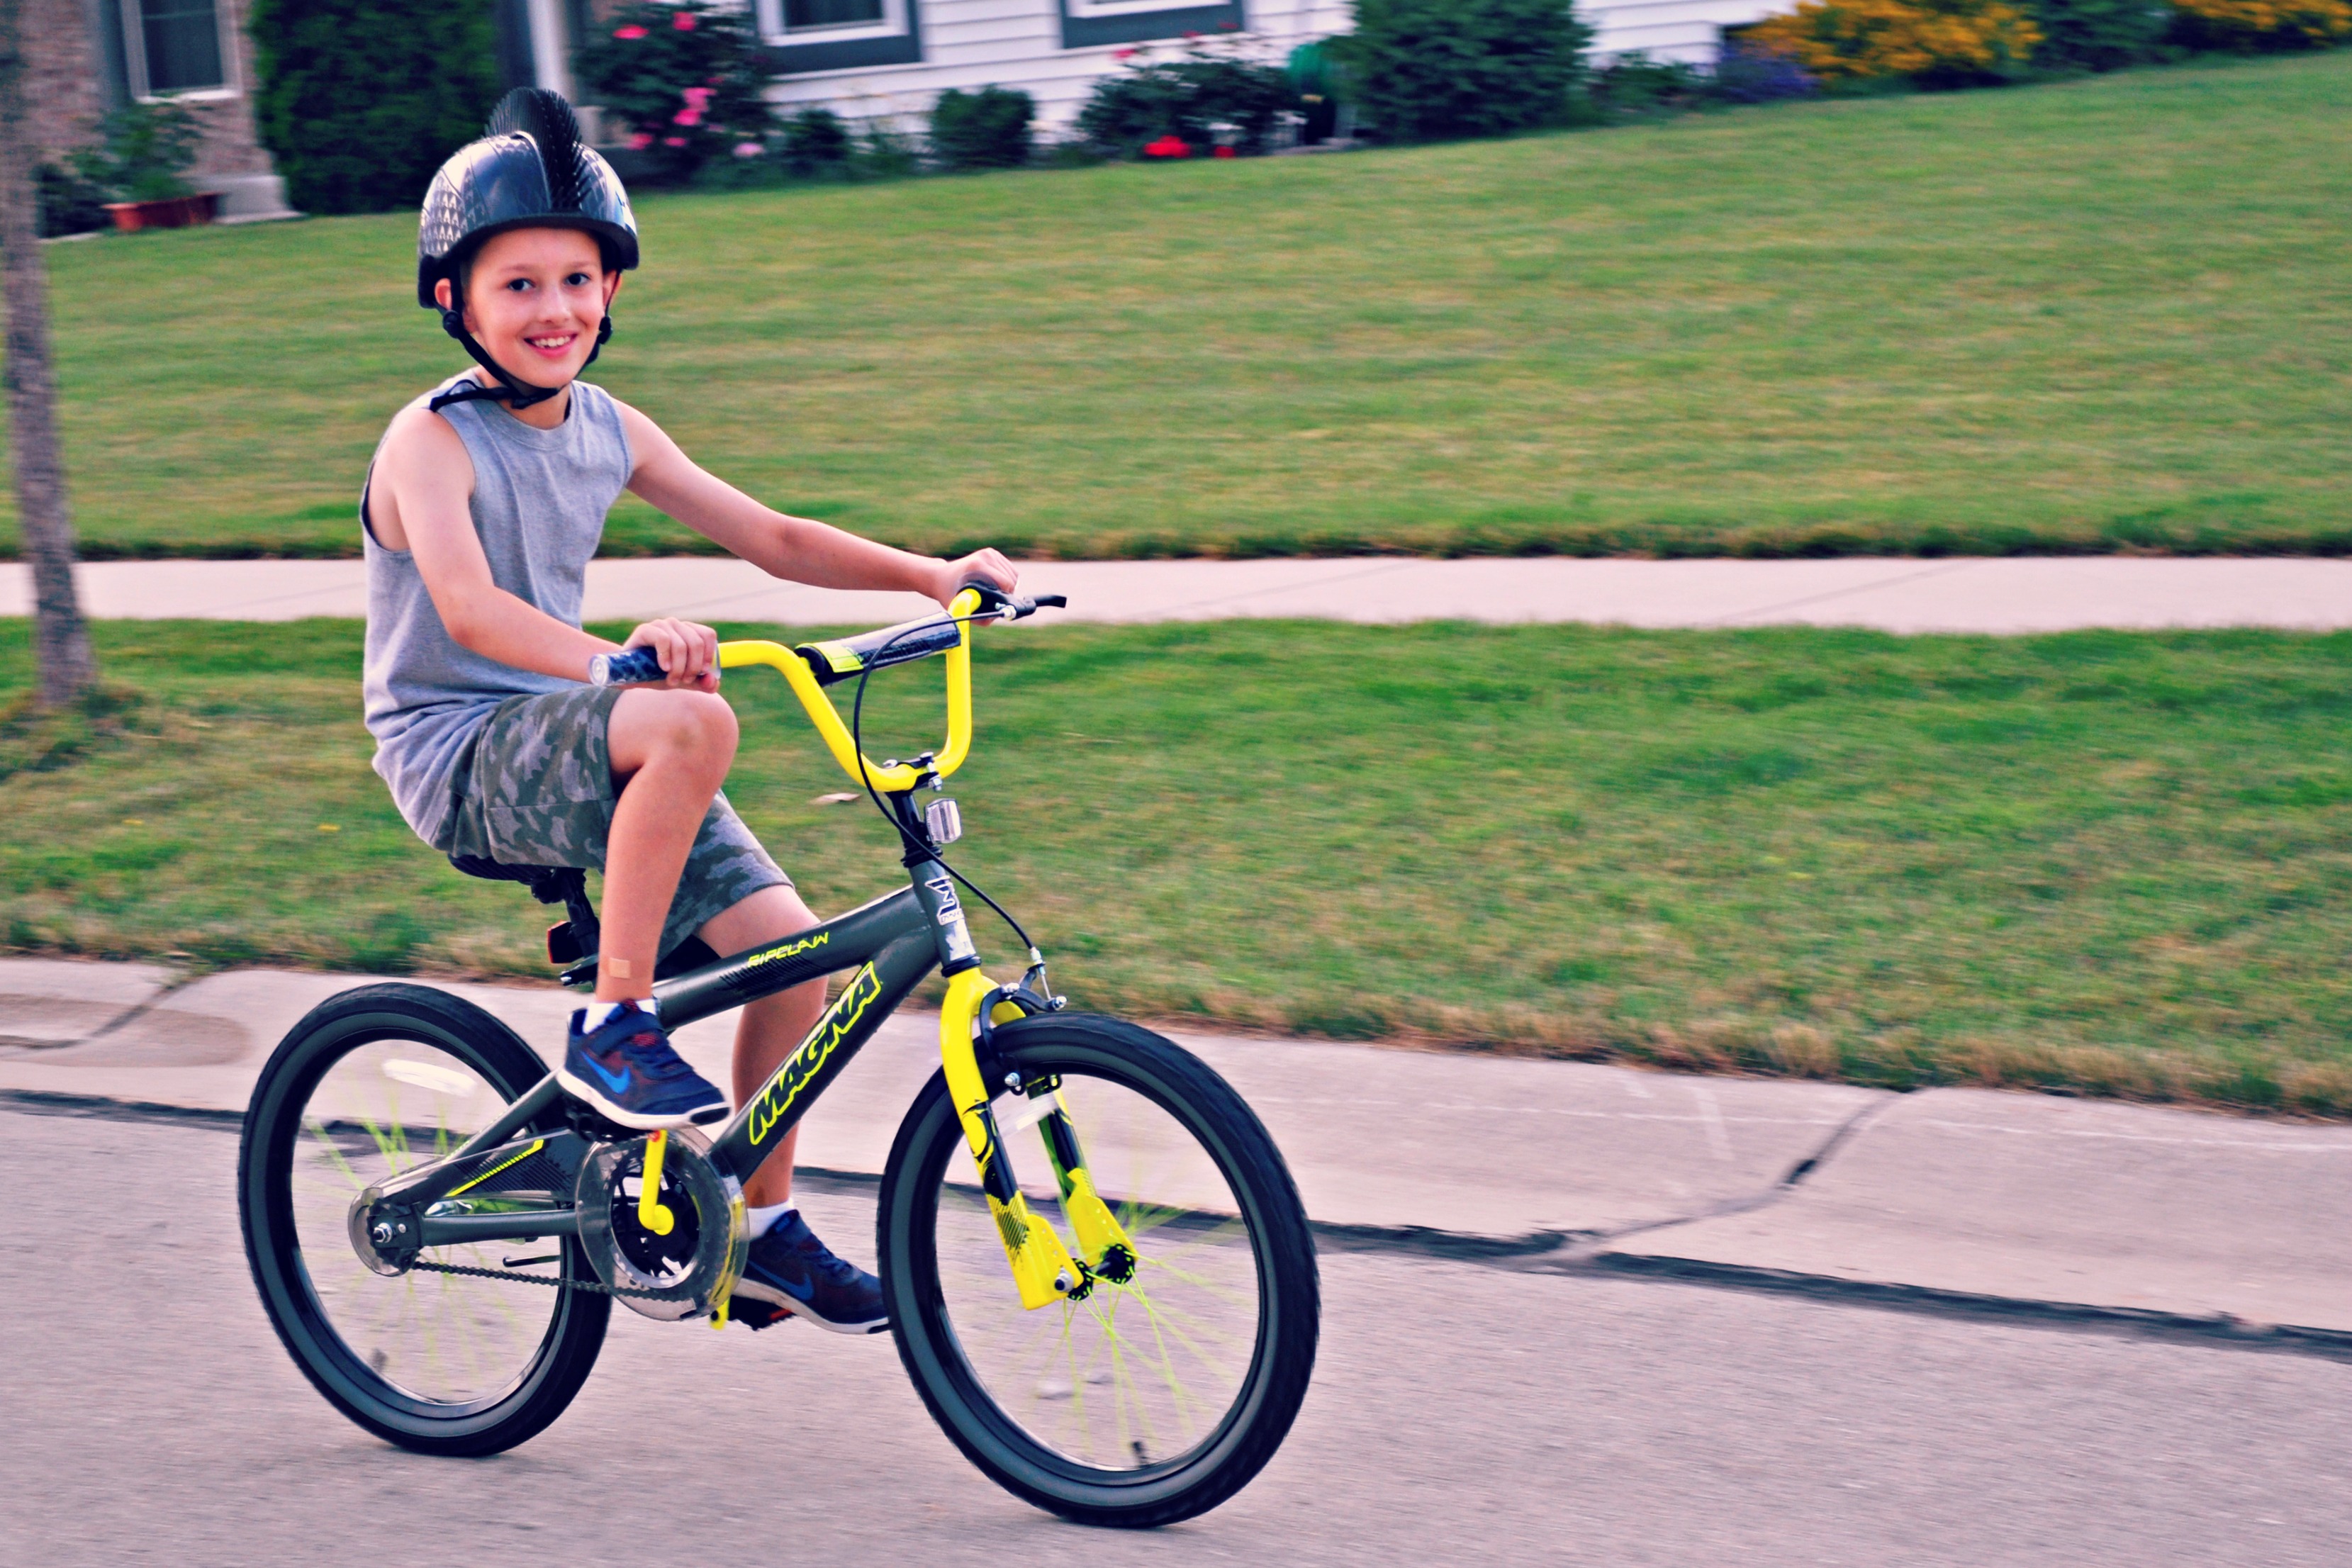 The children ride bikes